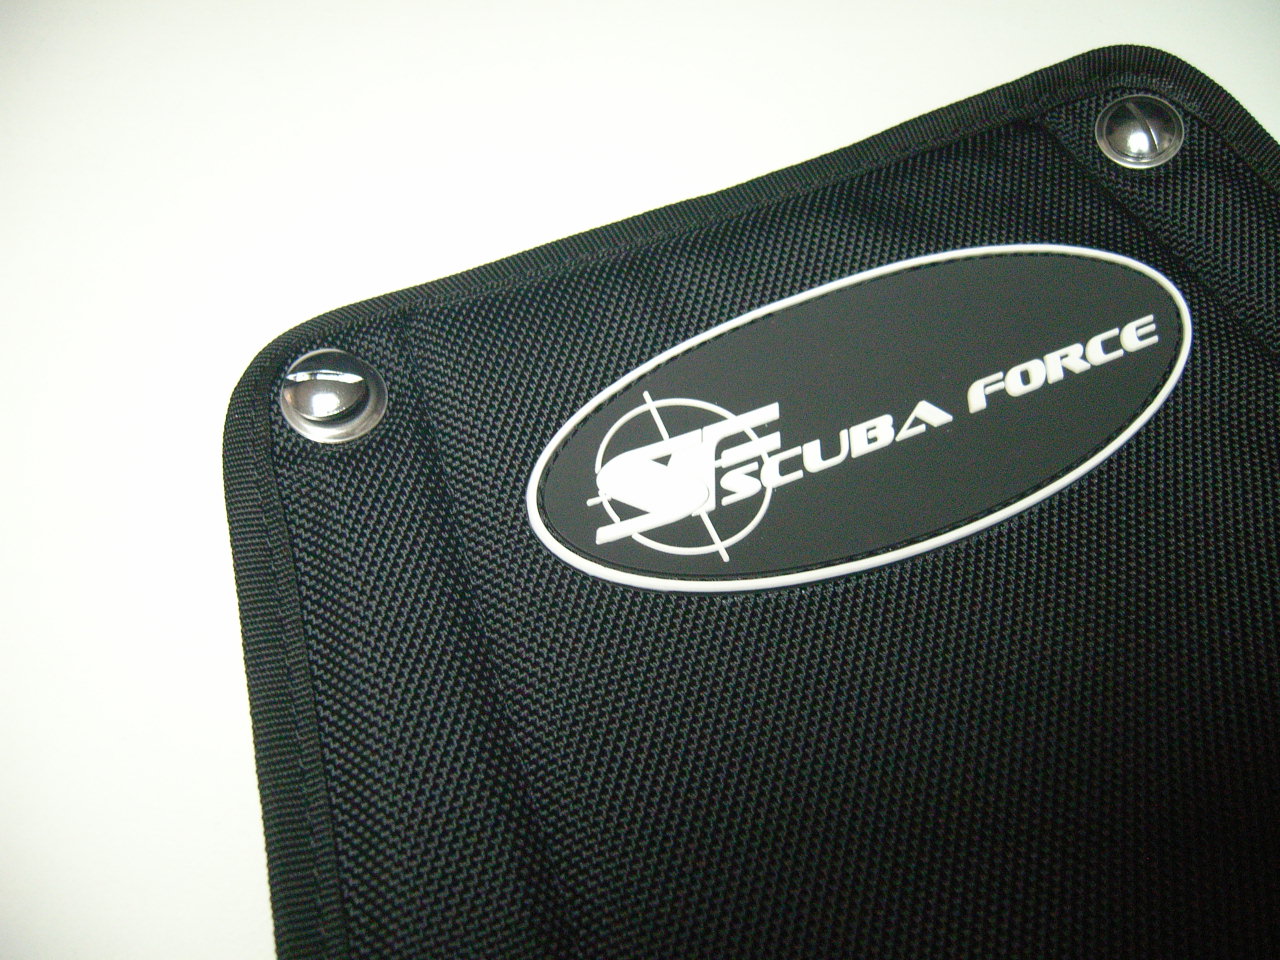 Scuba Force Storage Pack 